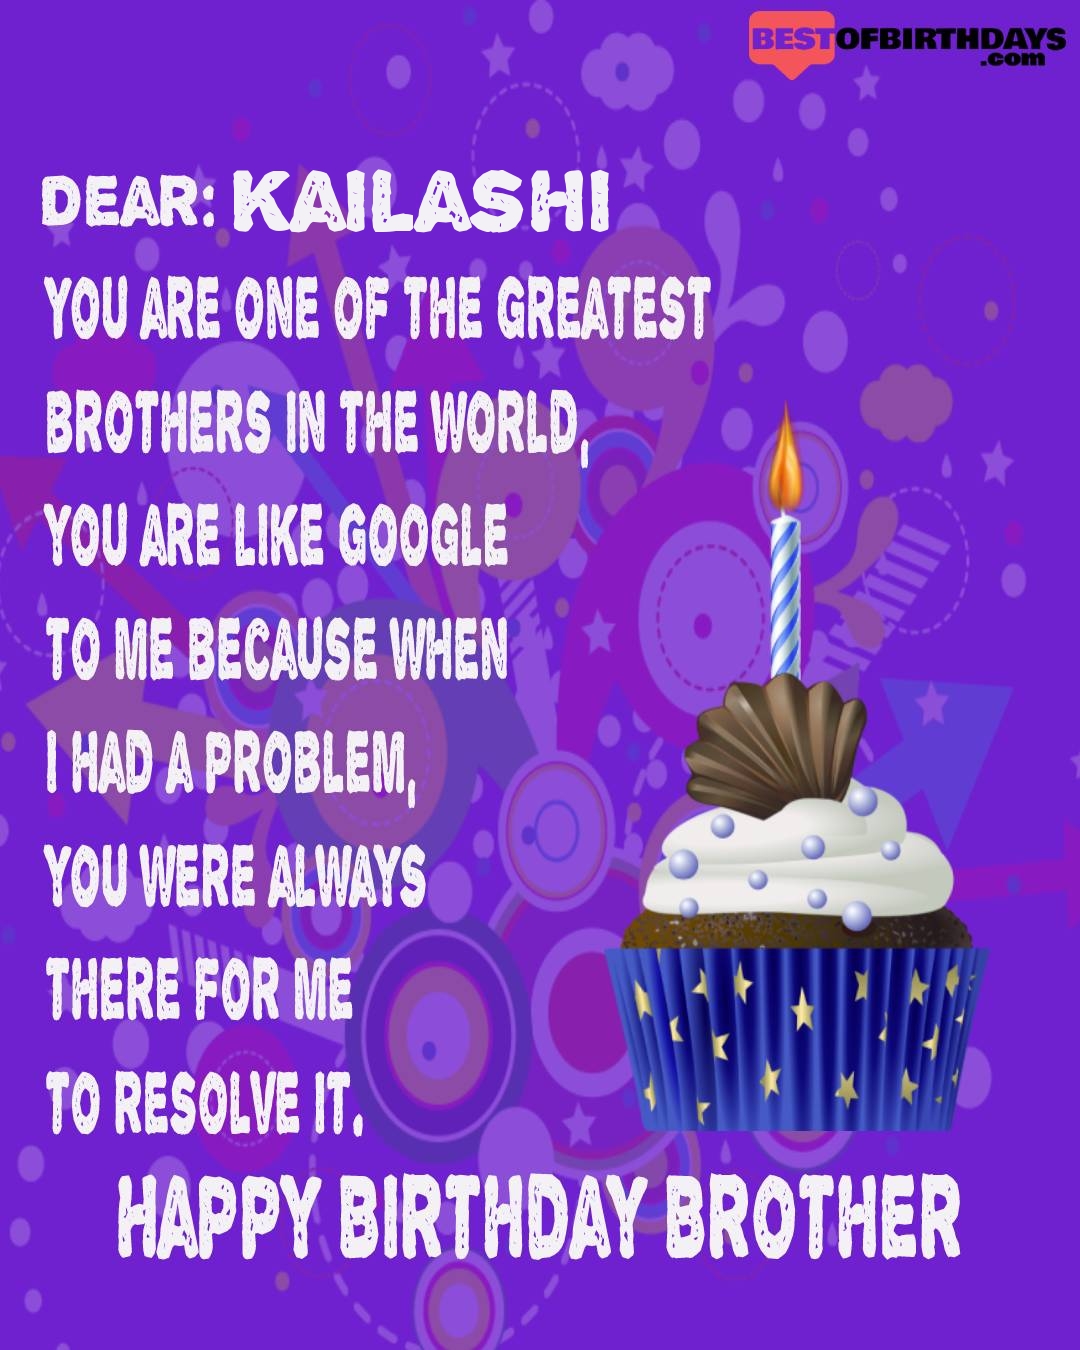 Happy birthday kailashi bhai brother bro